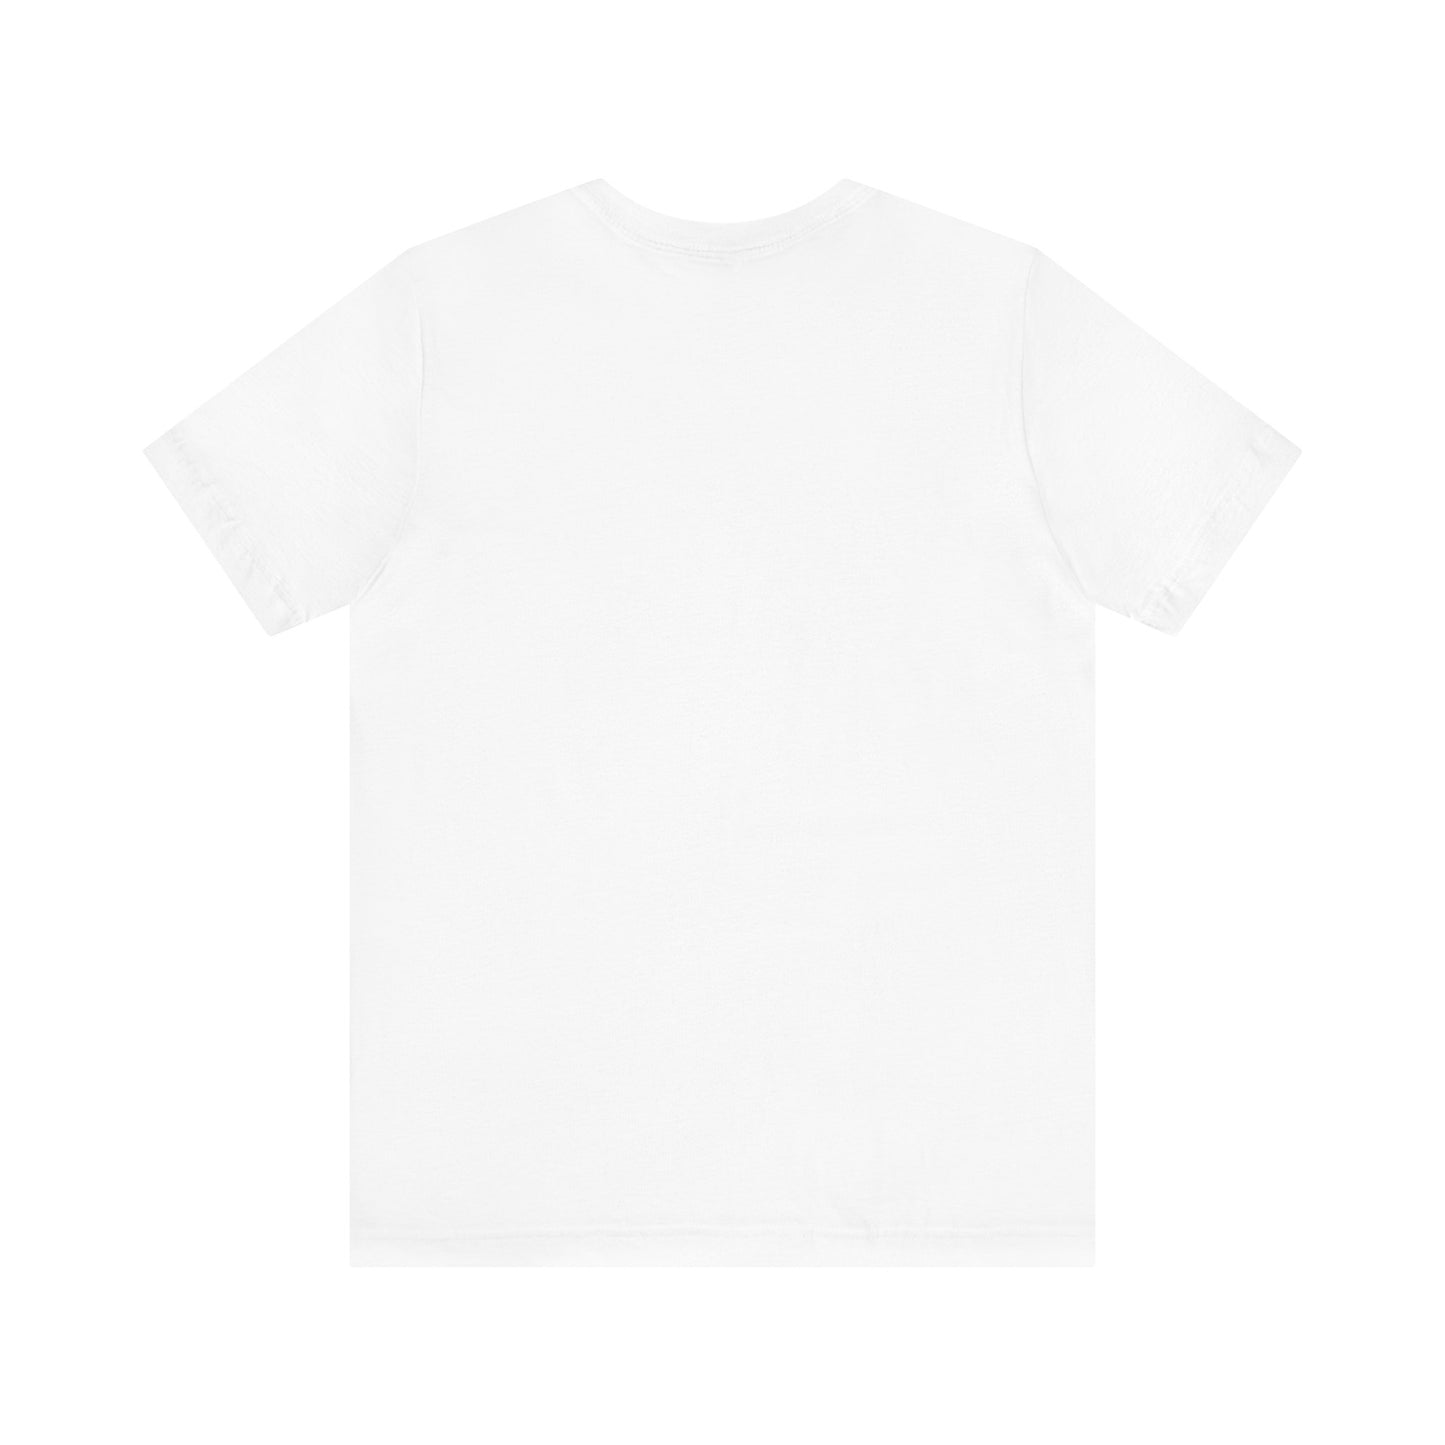 Uriel Through Eleanor - Unisex Jersey Short Sleeve T-Shirt